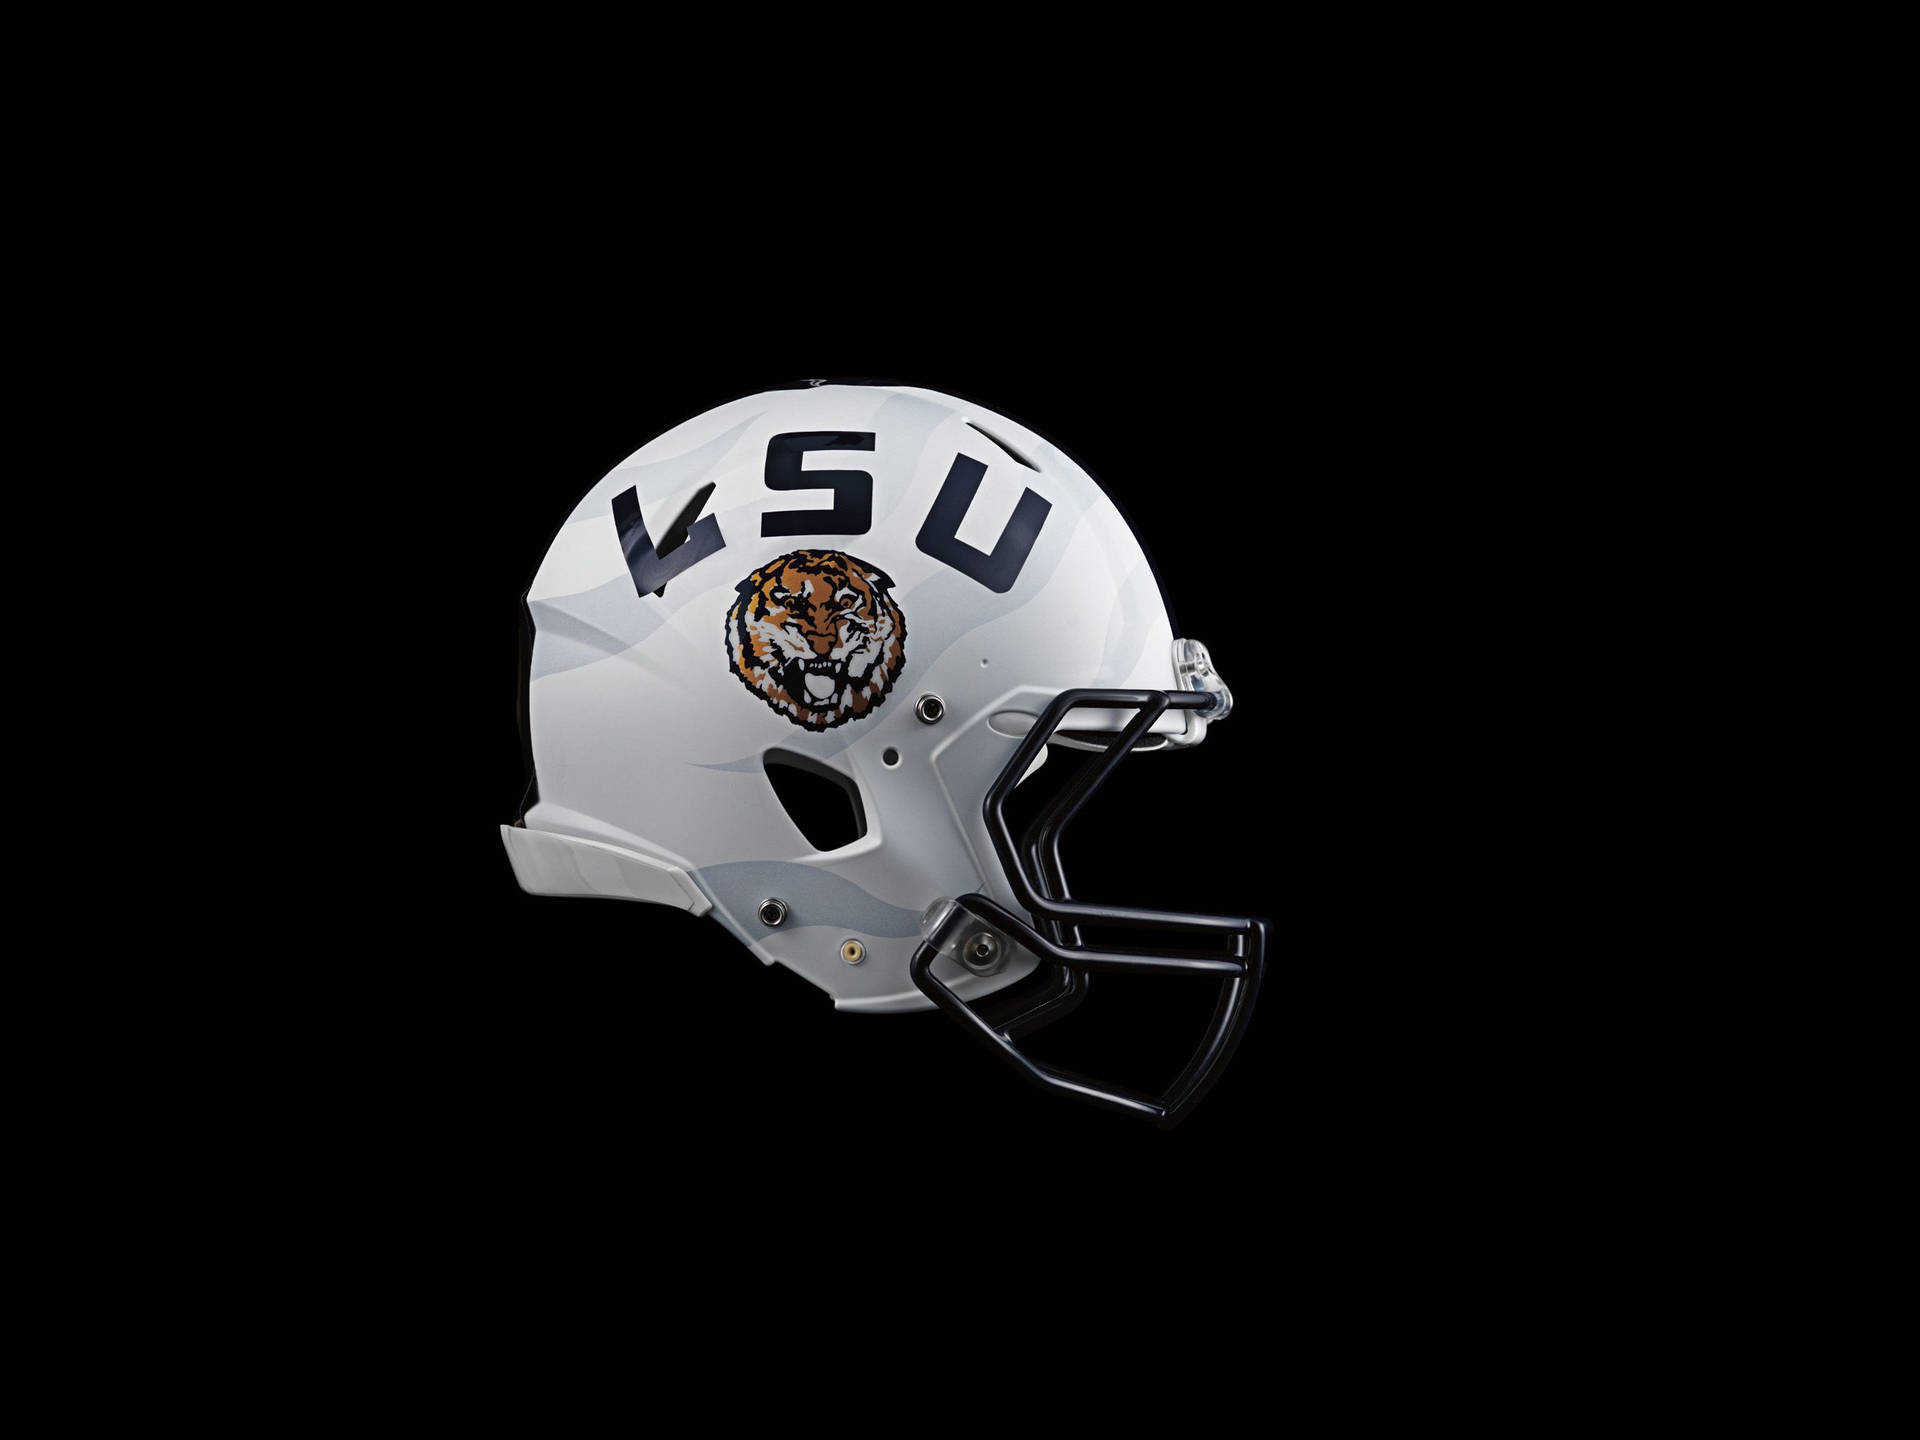 A White Helmet With The Ksu Logo On It Background